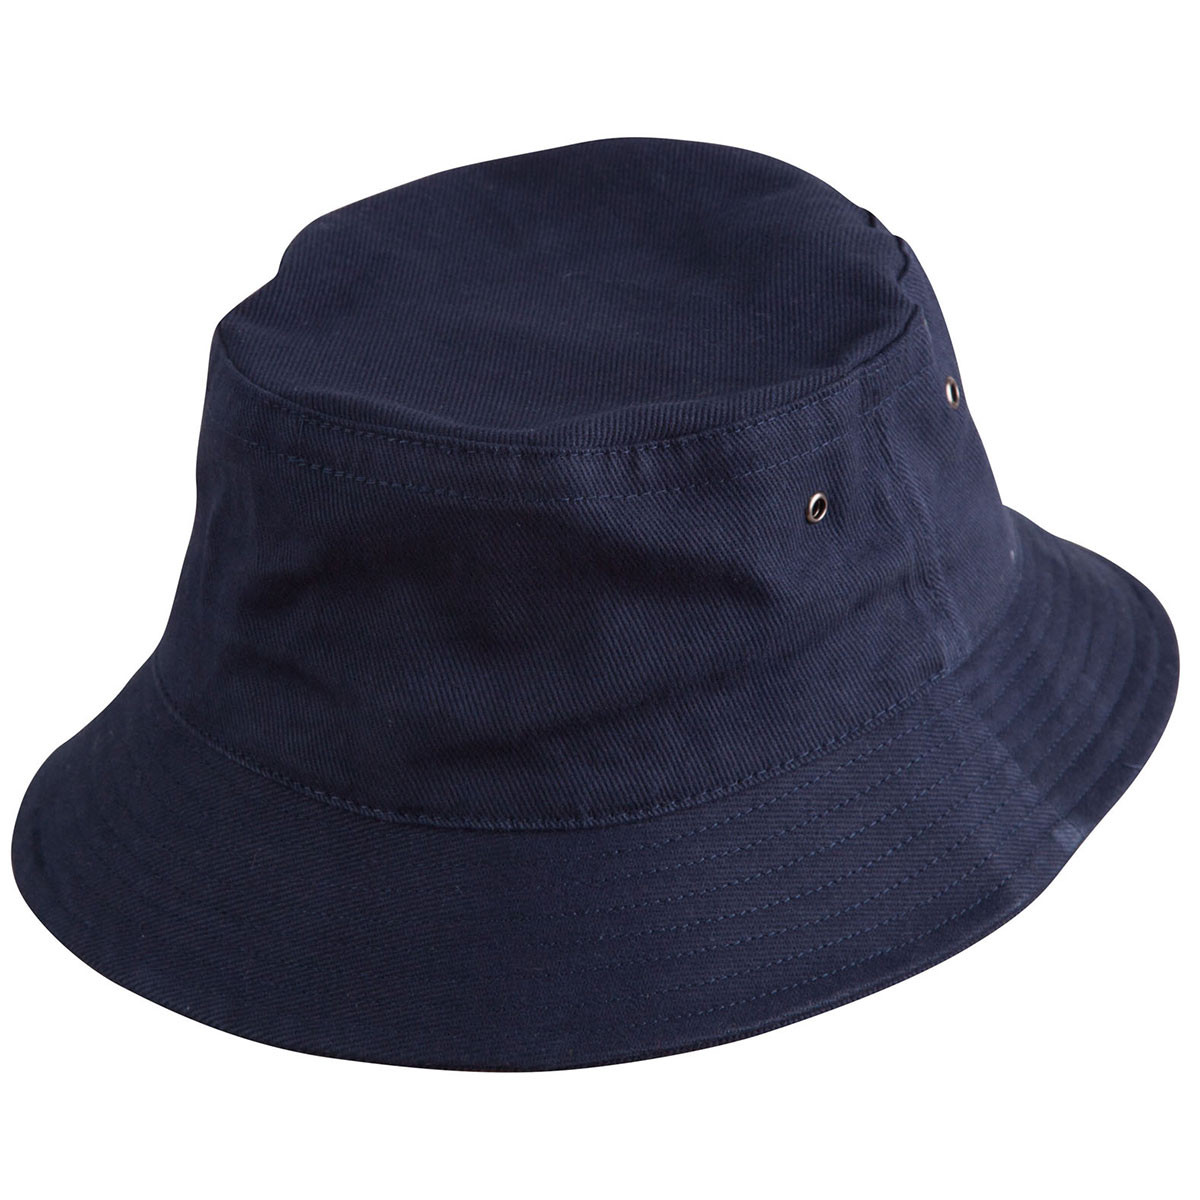 BUCKET HATS | wholesale | buy online | plain hat & apparel | blank clothing